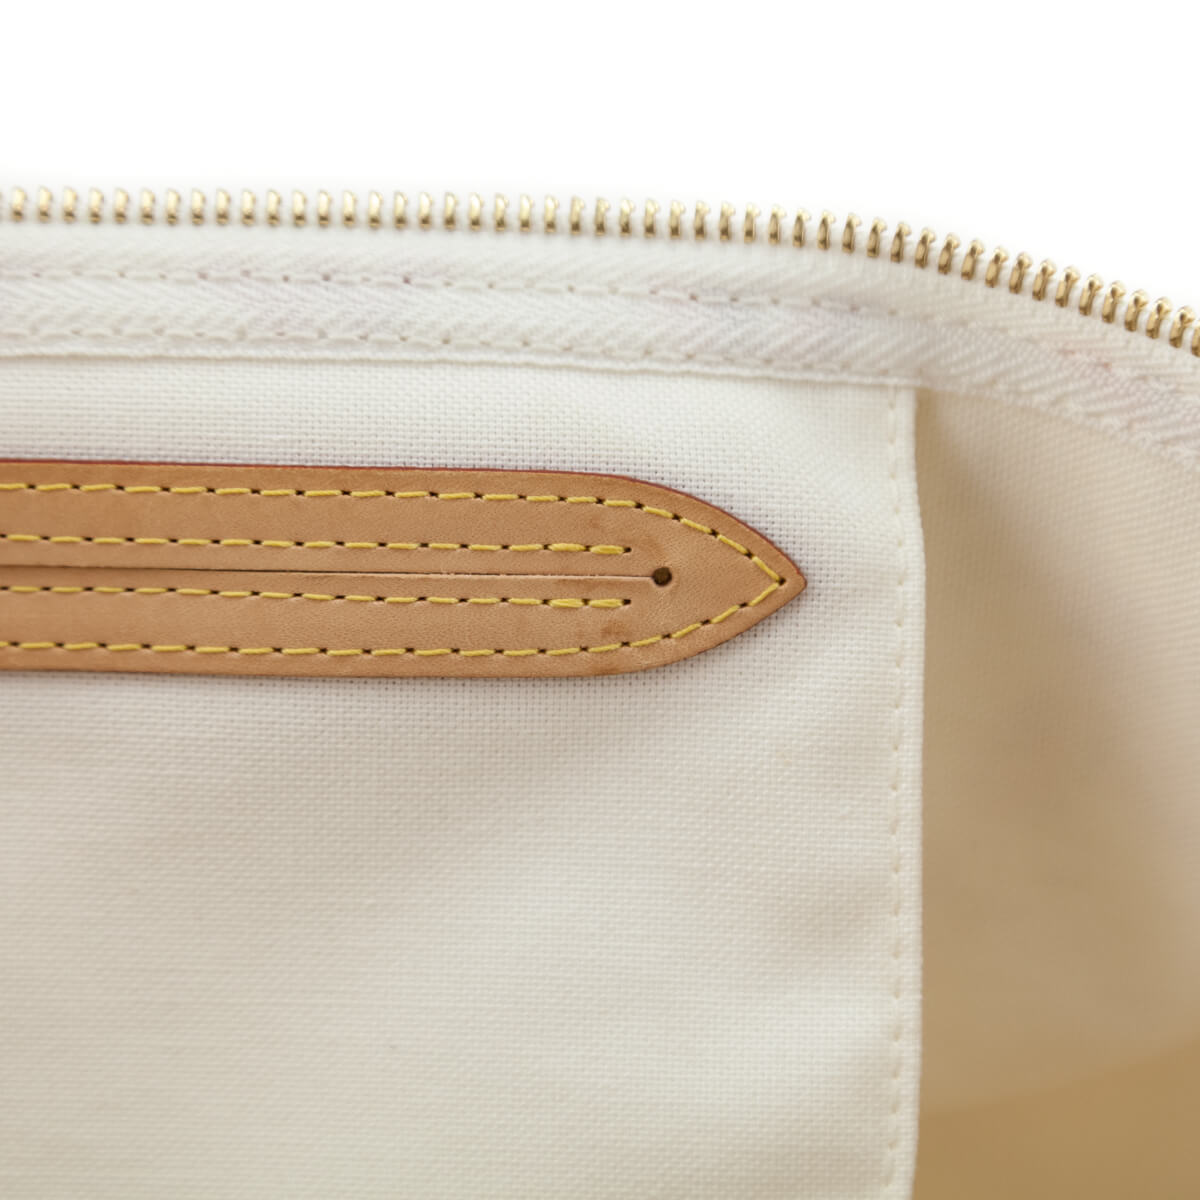 Louis Vuitton White Watercolor Aquarelle Speedy 35 - Love that Bag etc - Preowned Authentic Designer Handbags & Preloved Fashions